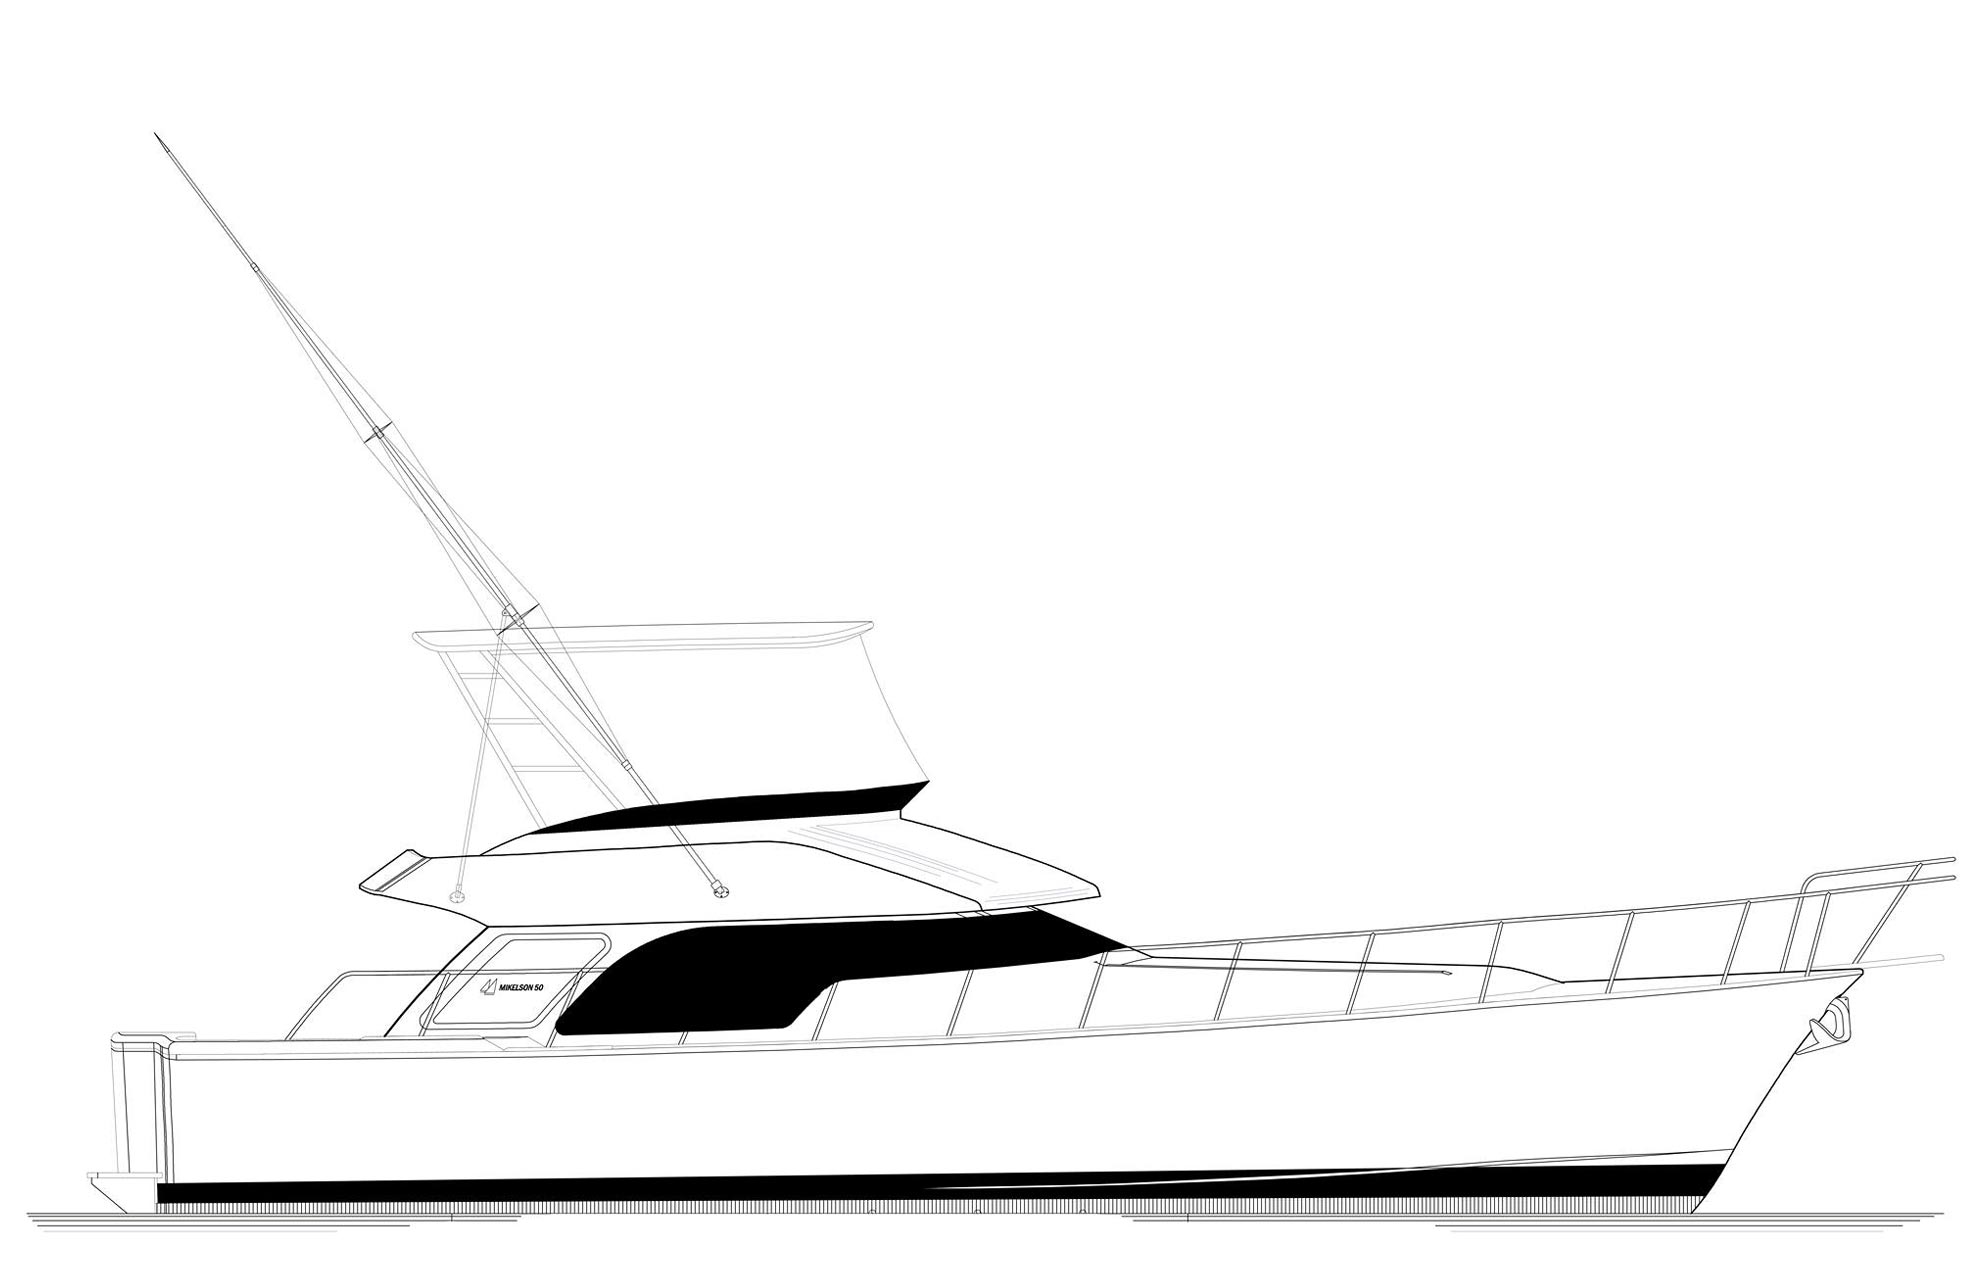 luxury sport fishing yachts